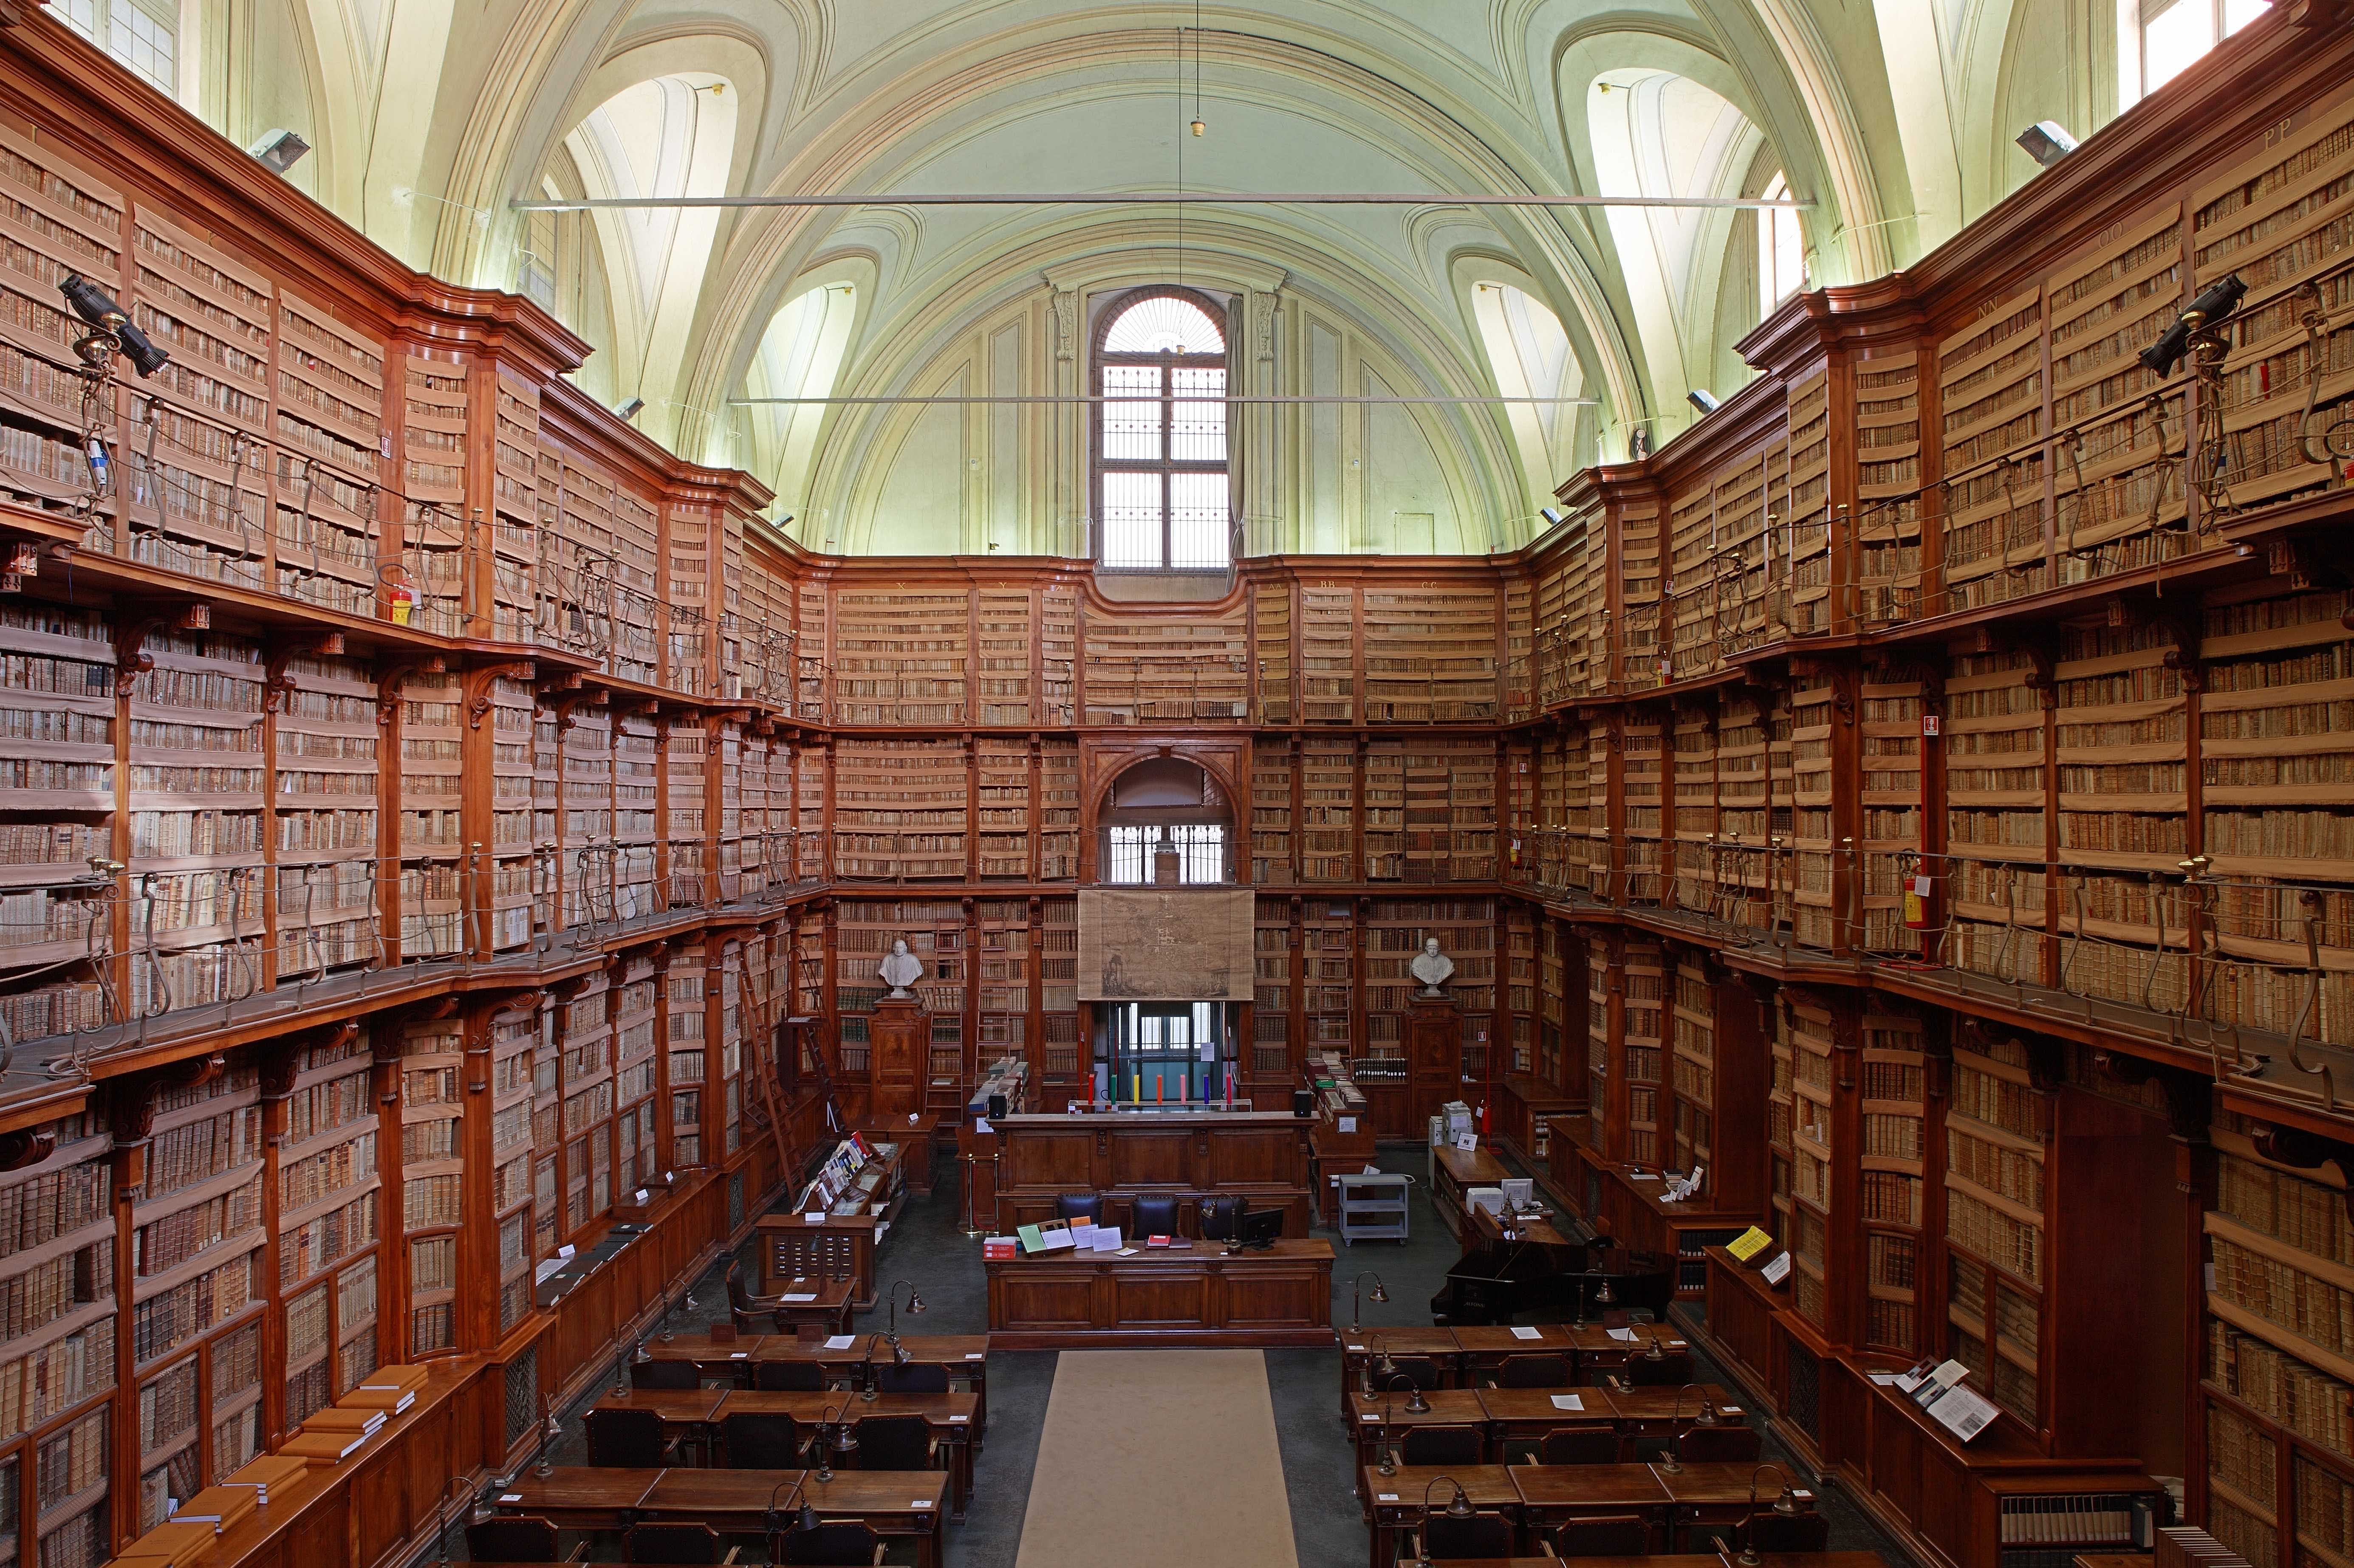 Library of medicine